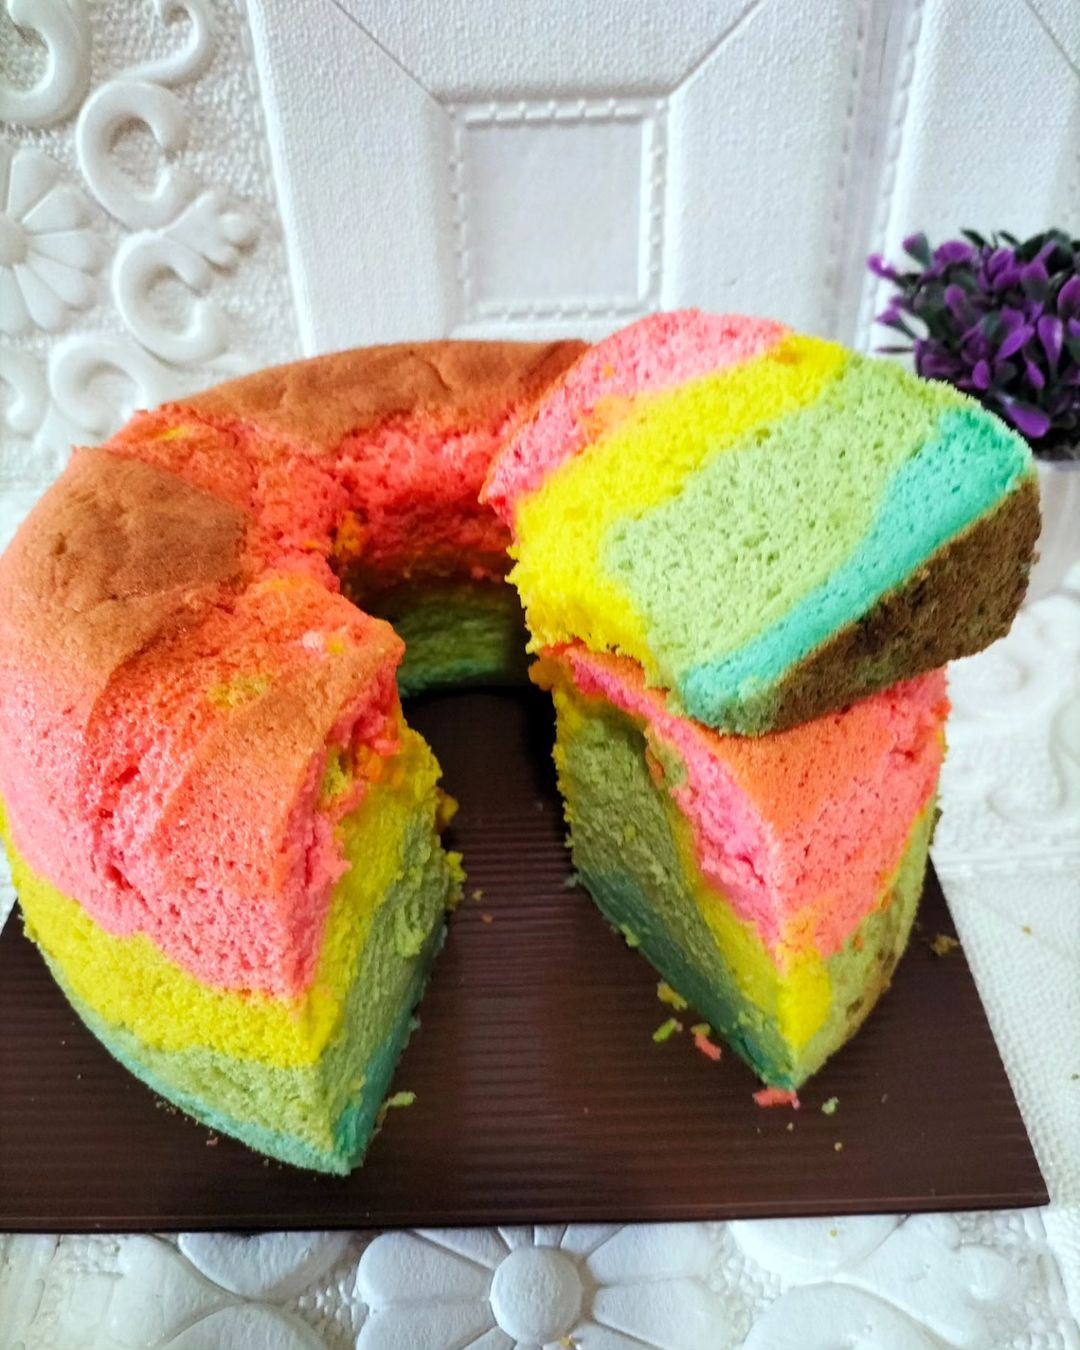 Rainbow Chiffon Cake